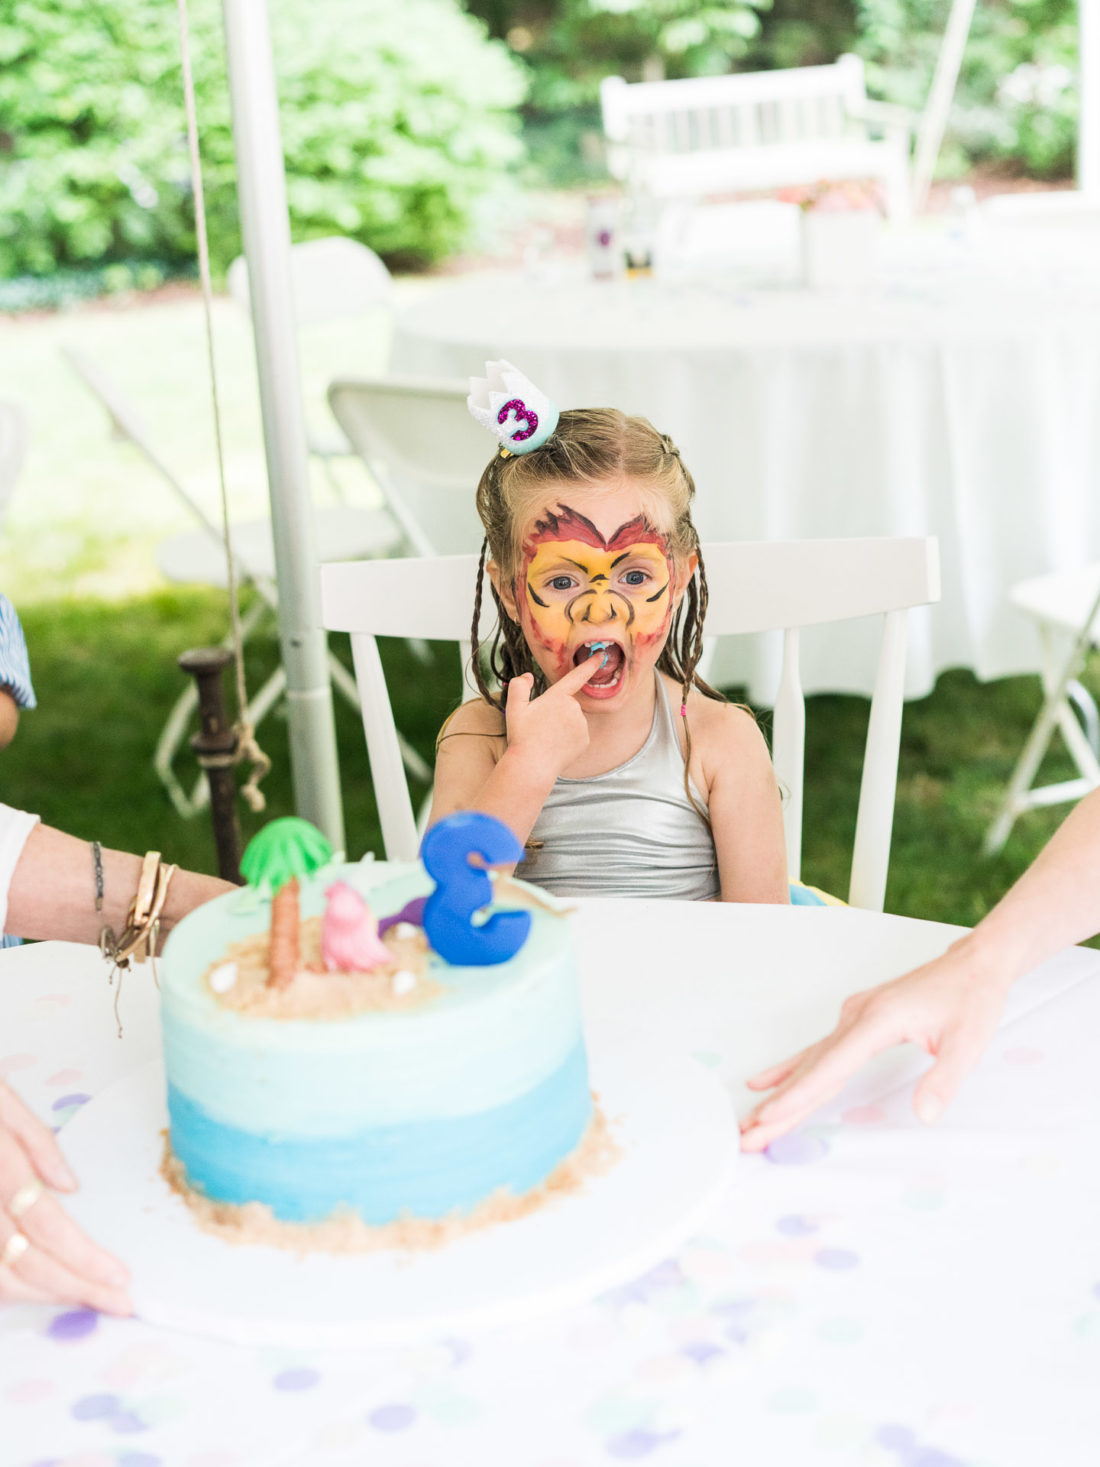 Marlowe Martino tastes the cake at her third birthday party